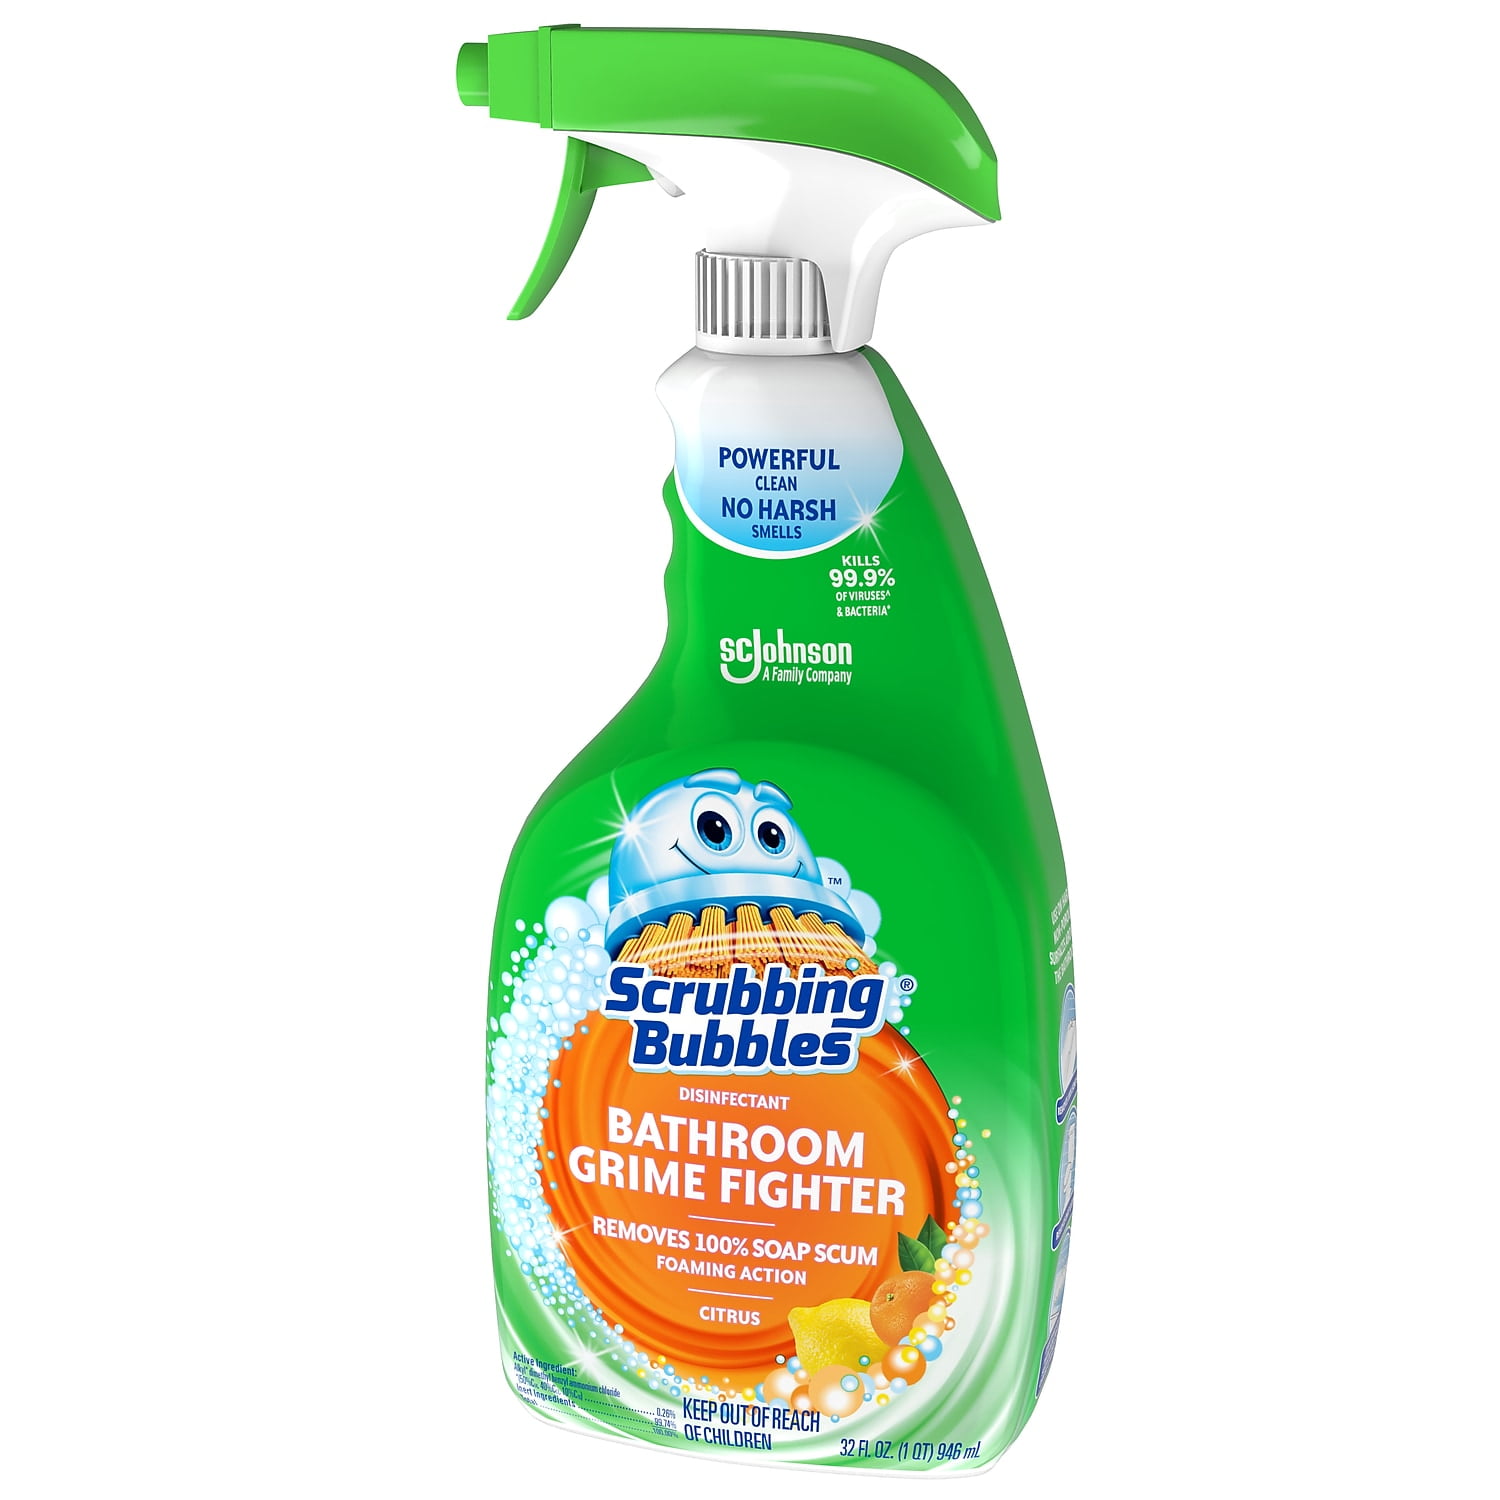 Scrubbing Bubbles Lot Of 3 Daily Shower Cleaner Spray 946ml/ 32 fl oz  Rainshower